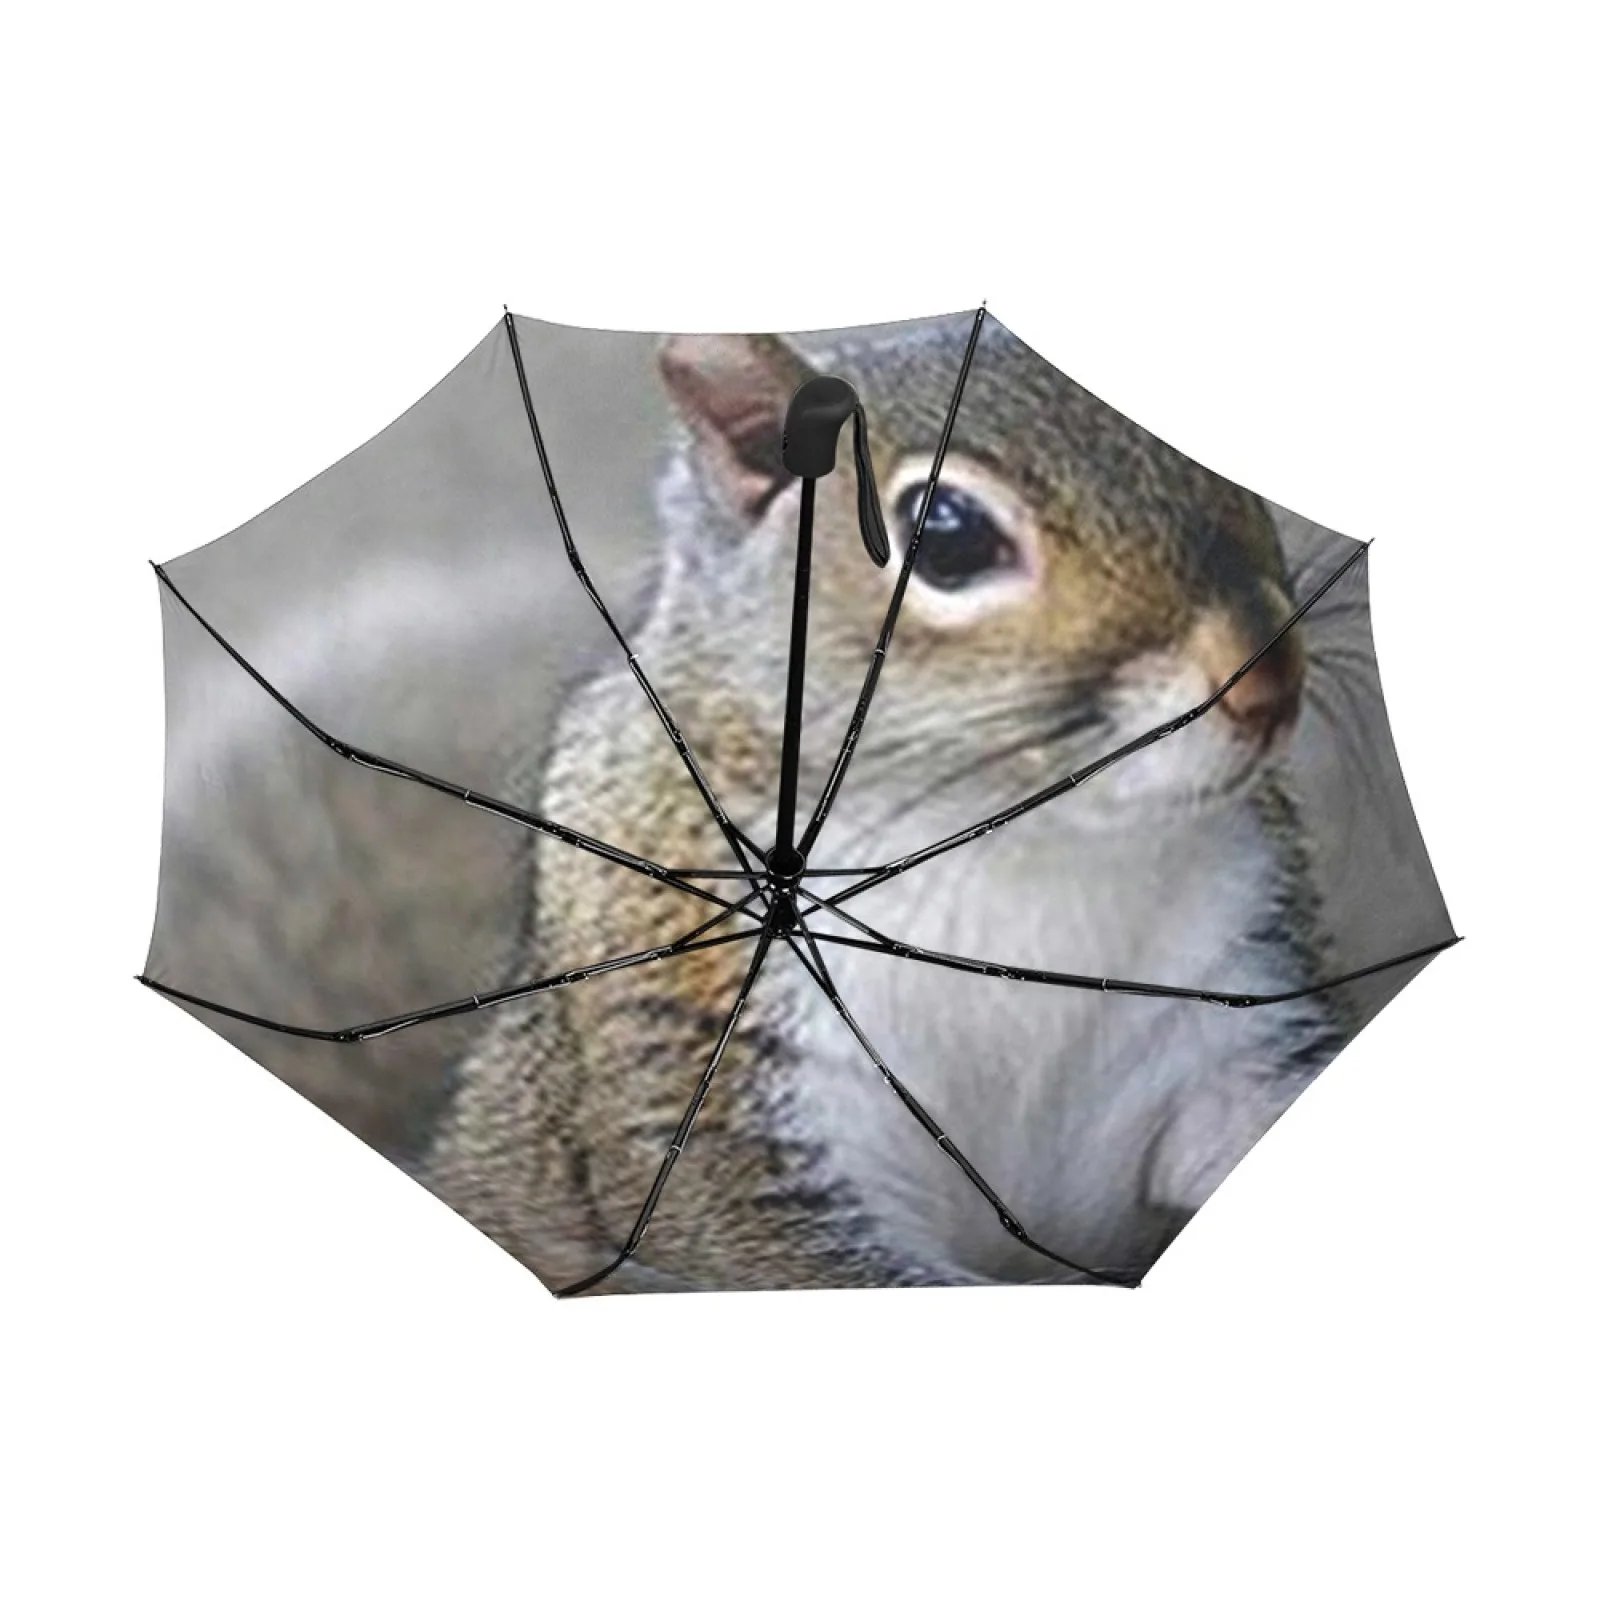 

Squirrel Automatic Tri Fold Umbrella Sun Anti-UV Foldable Compact Light Weight Protection (Inside Printing) Travel Umbrella